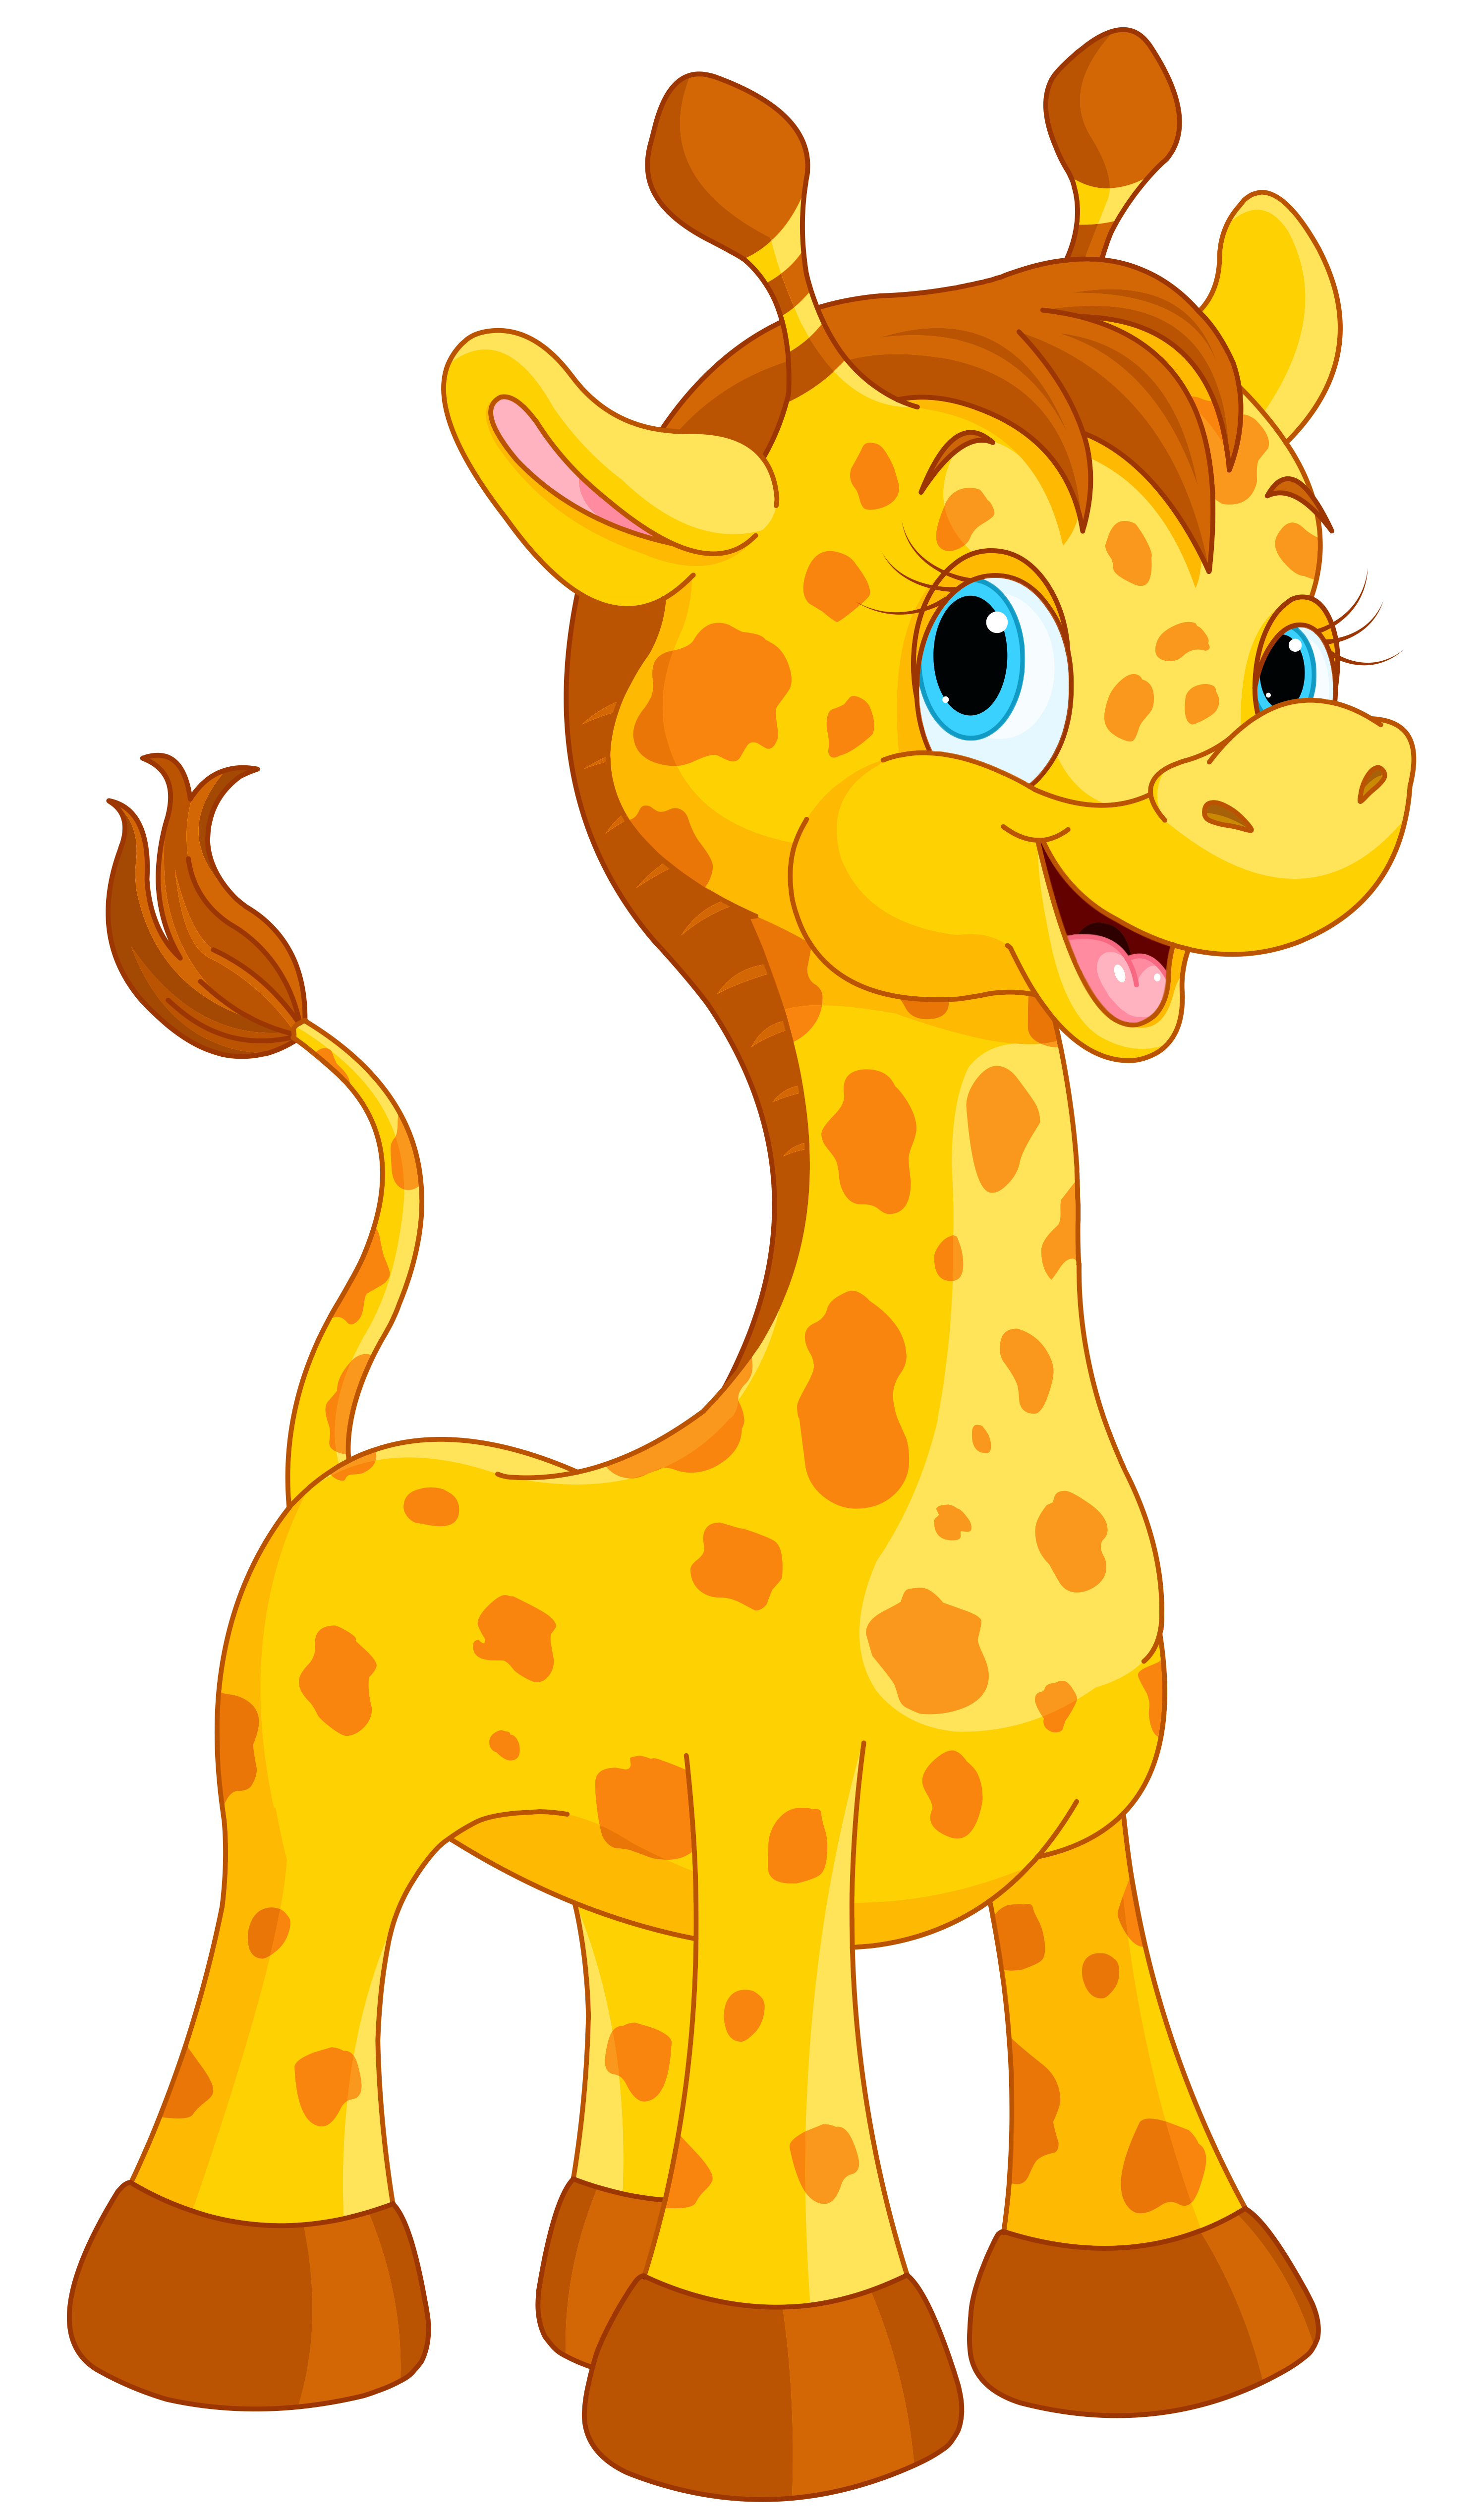 Craft clipart cute. Giraffe cartoon png image